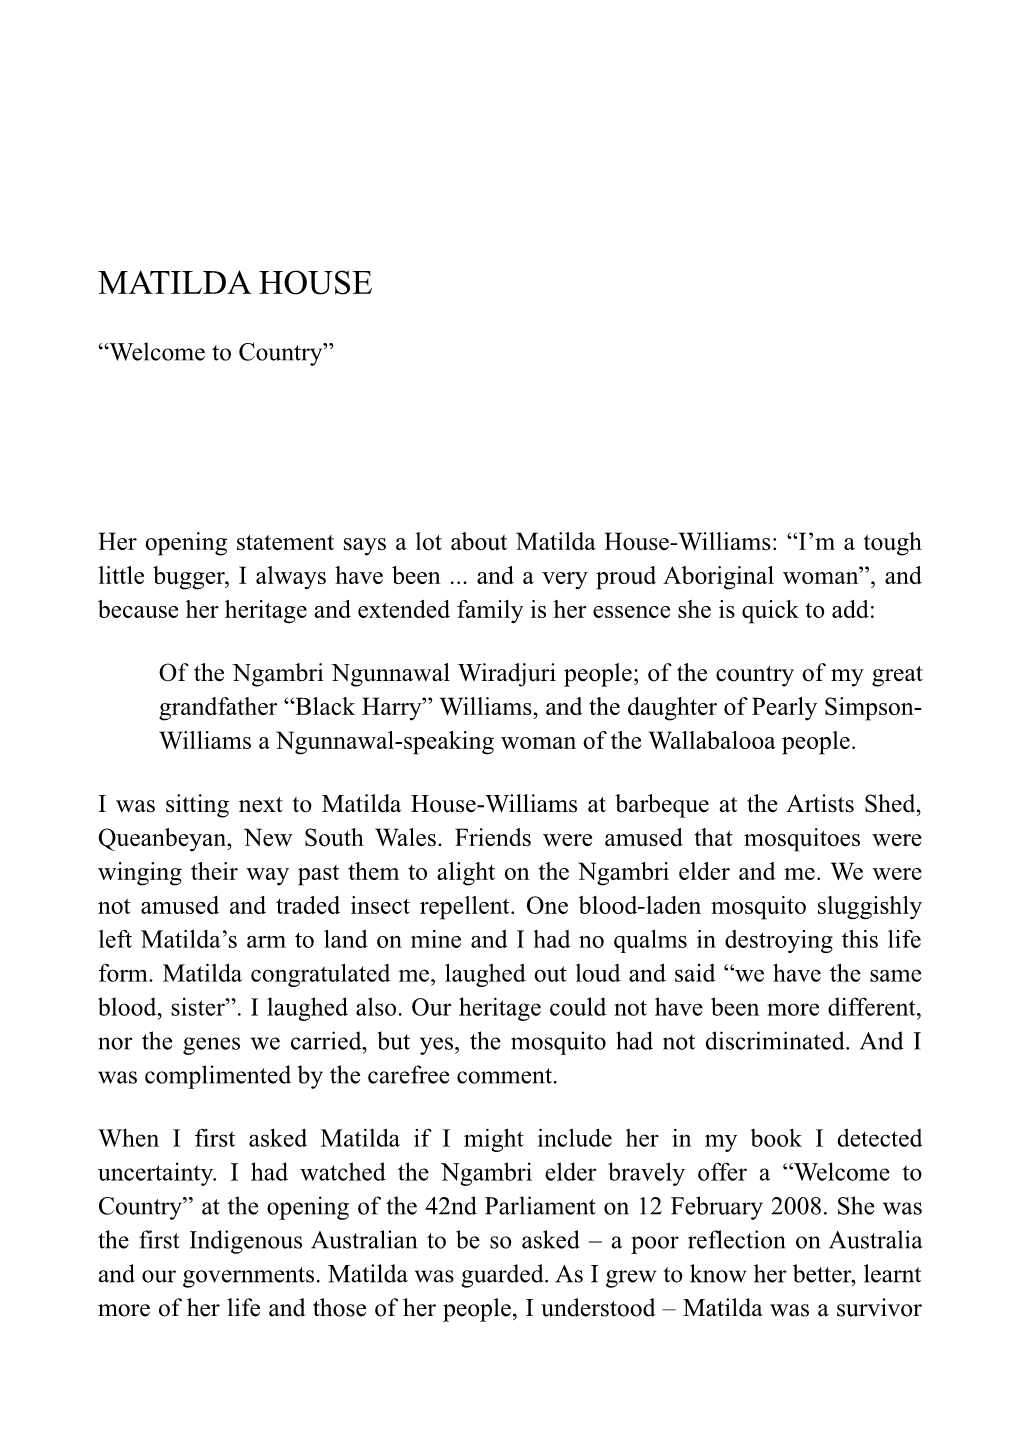 Matilda House